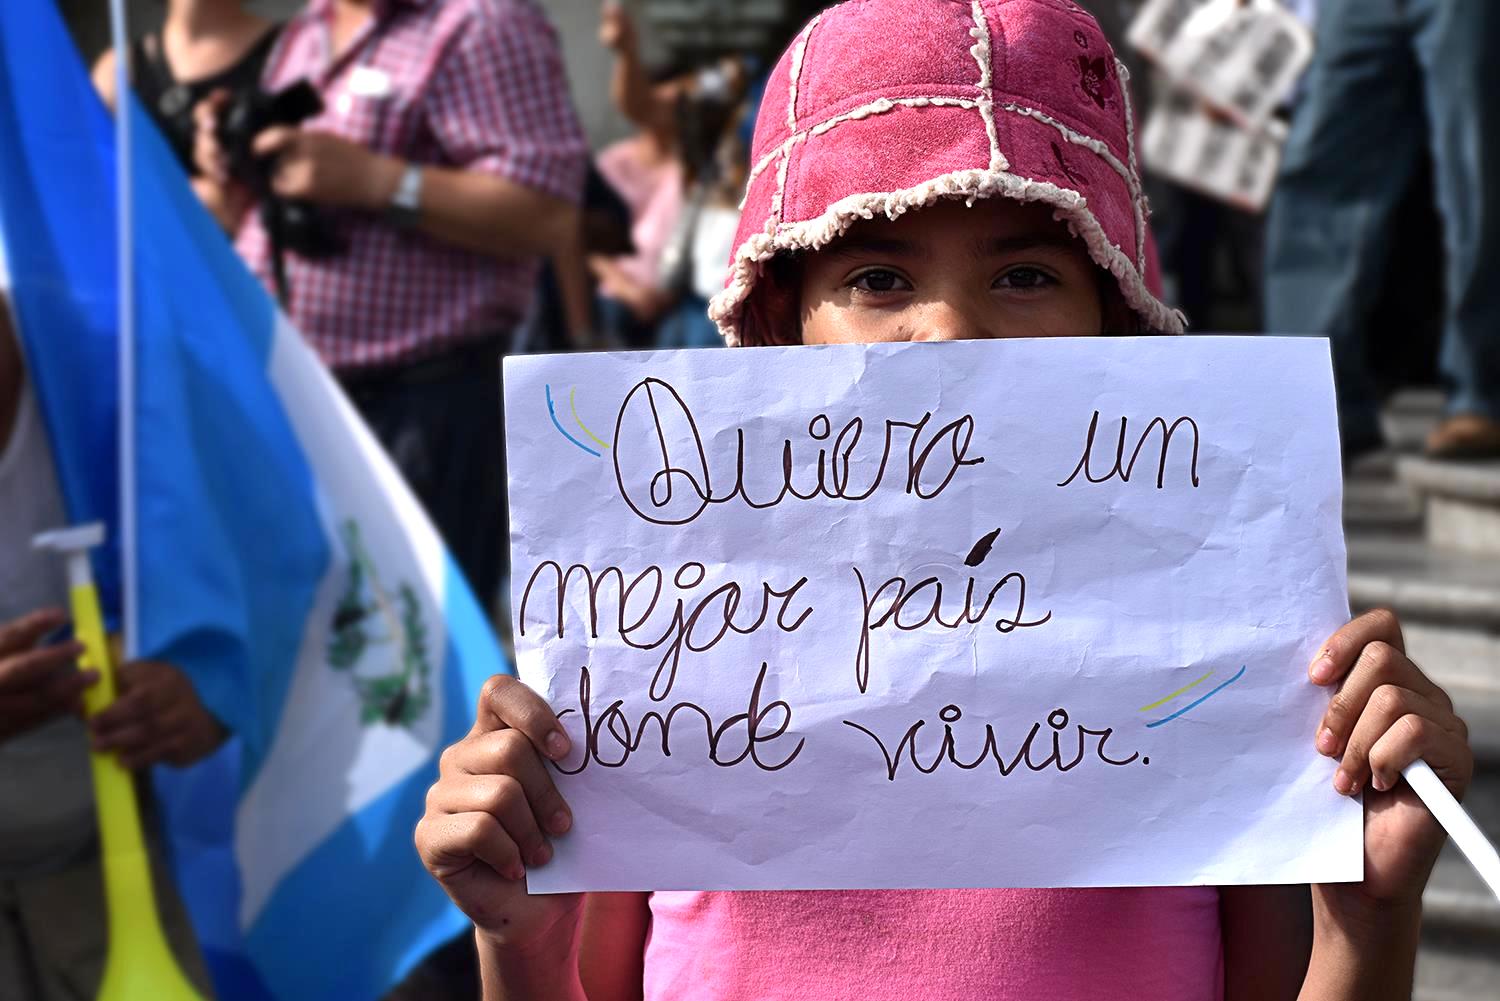 Guatem-mata, un mensaje no tan subliminal